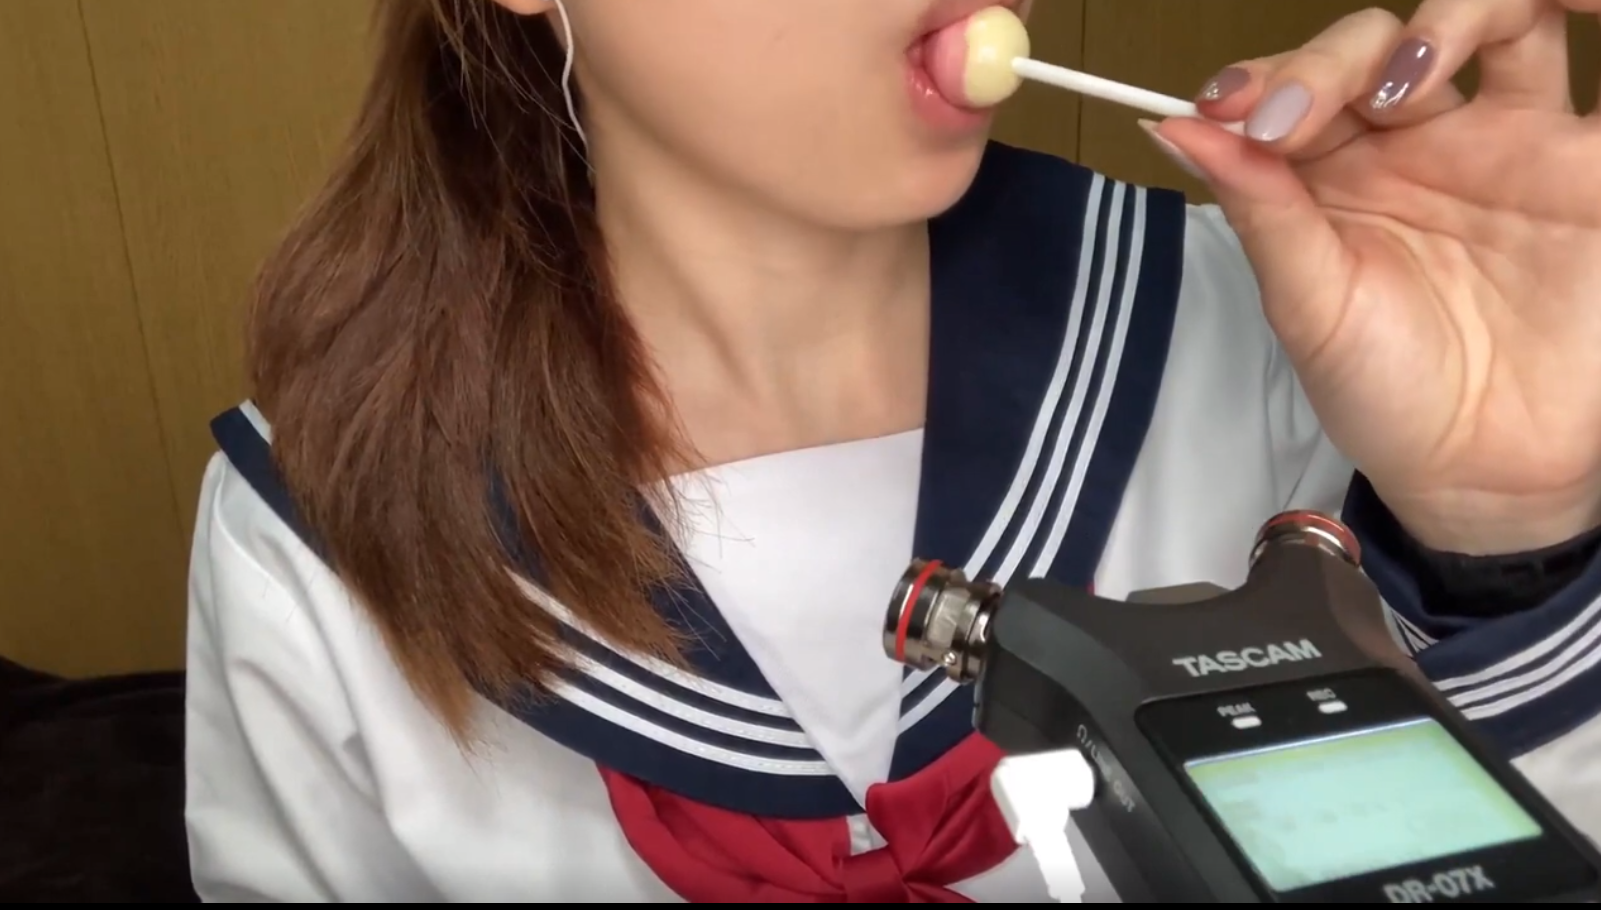 【ASMR】学生妹近距离舔舐棒棒チュッパチャップスを舐める音 Sound of licking Chupa Chups-boKE